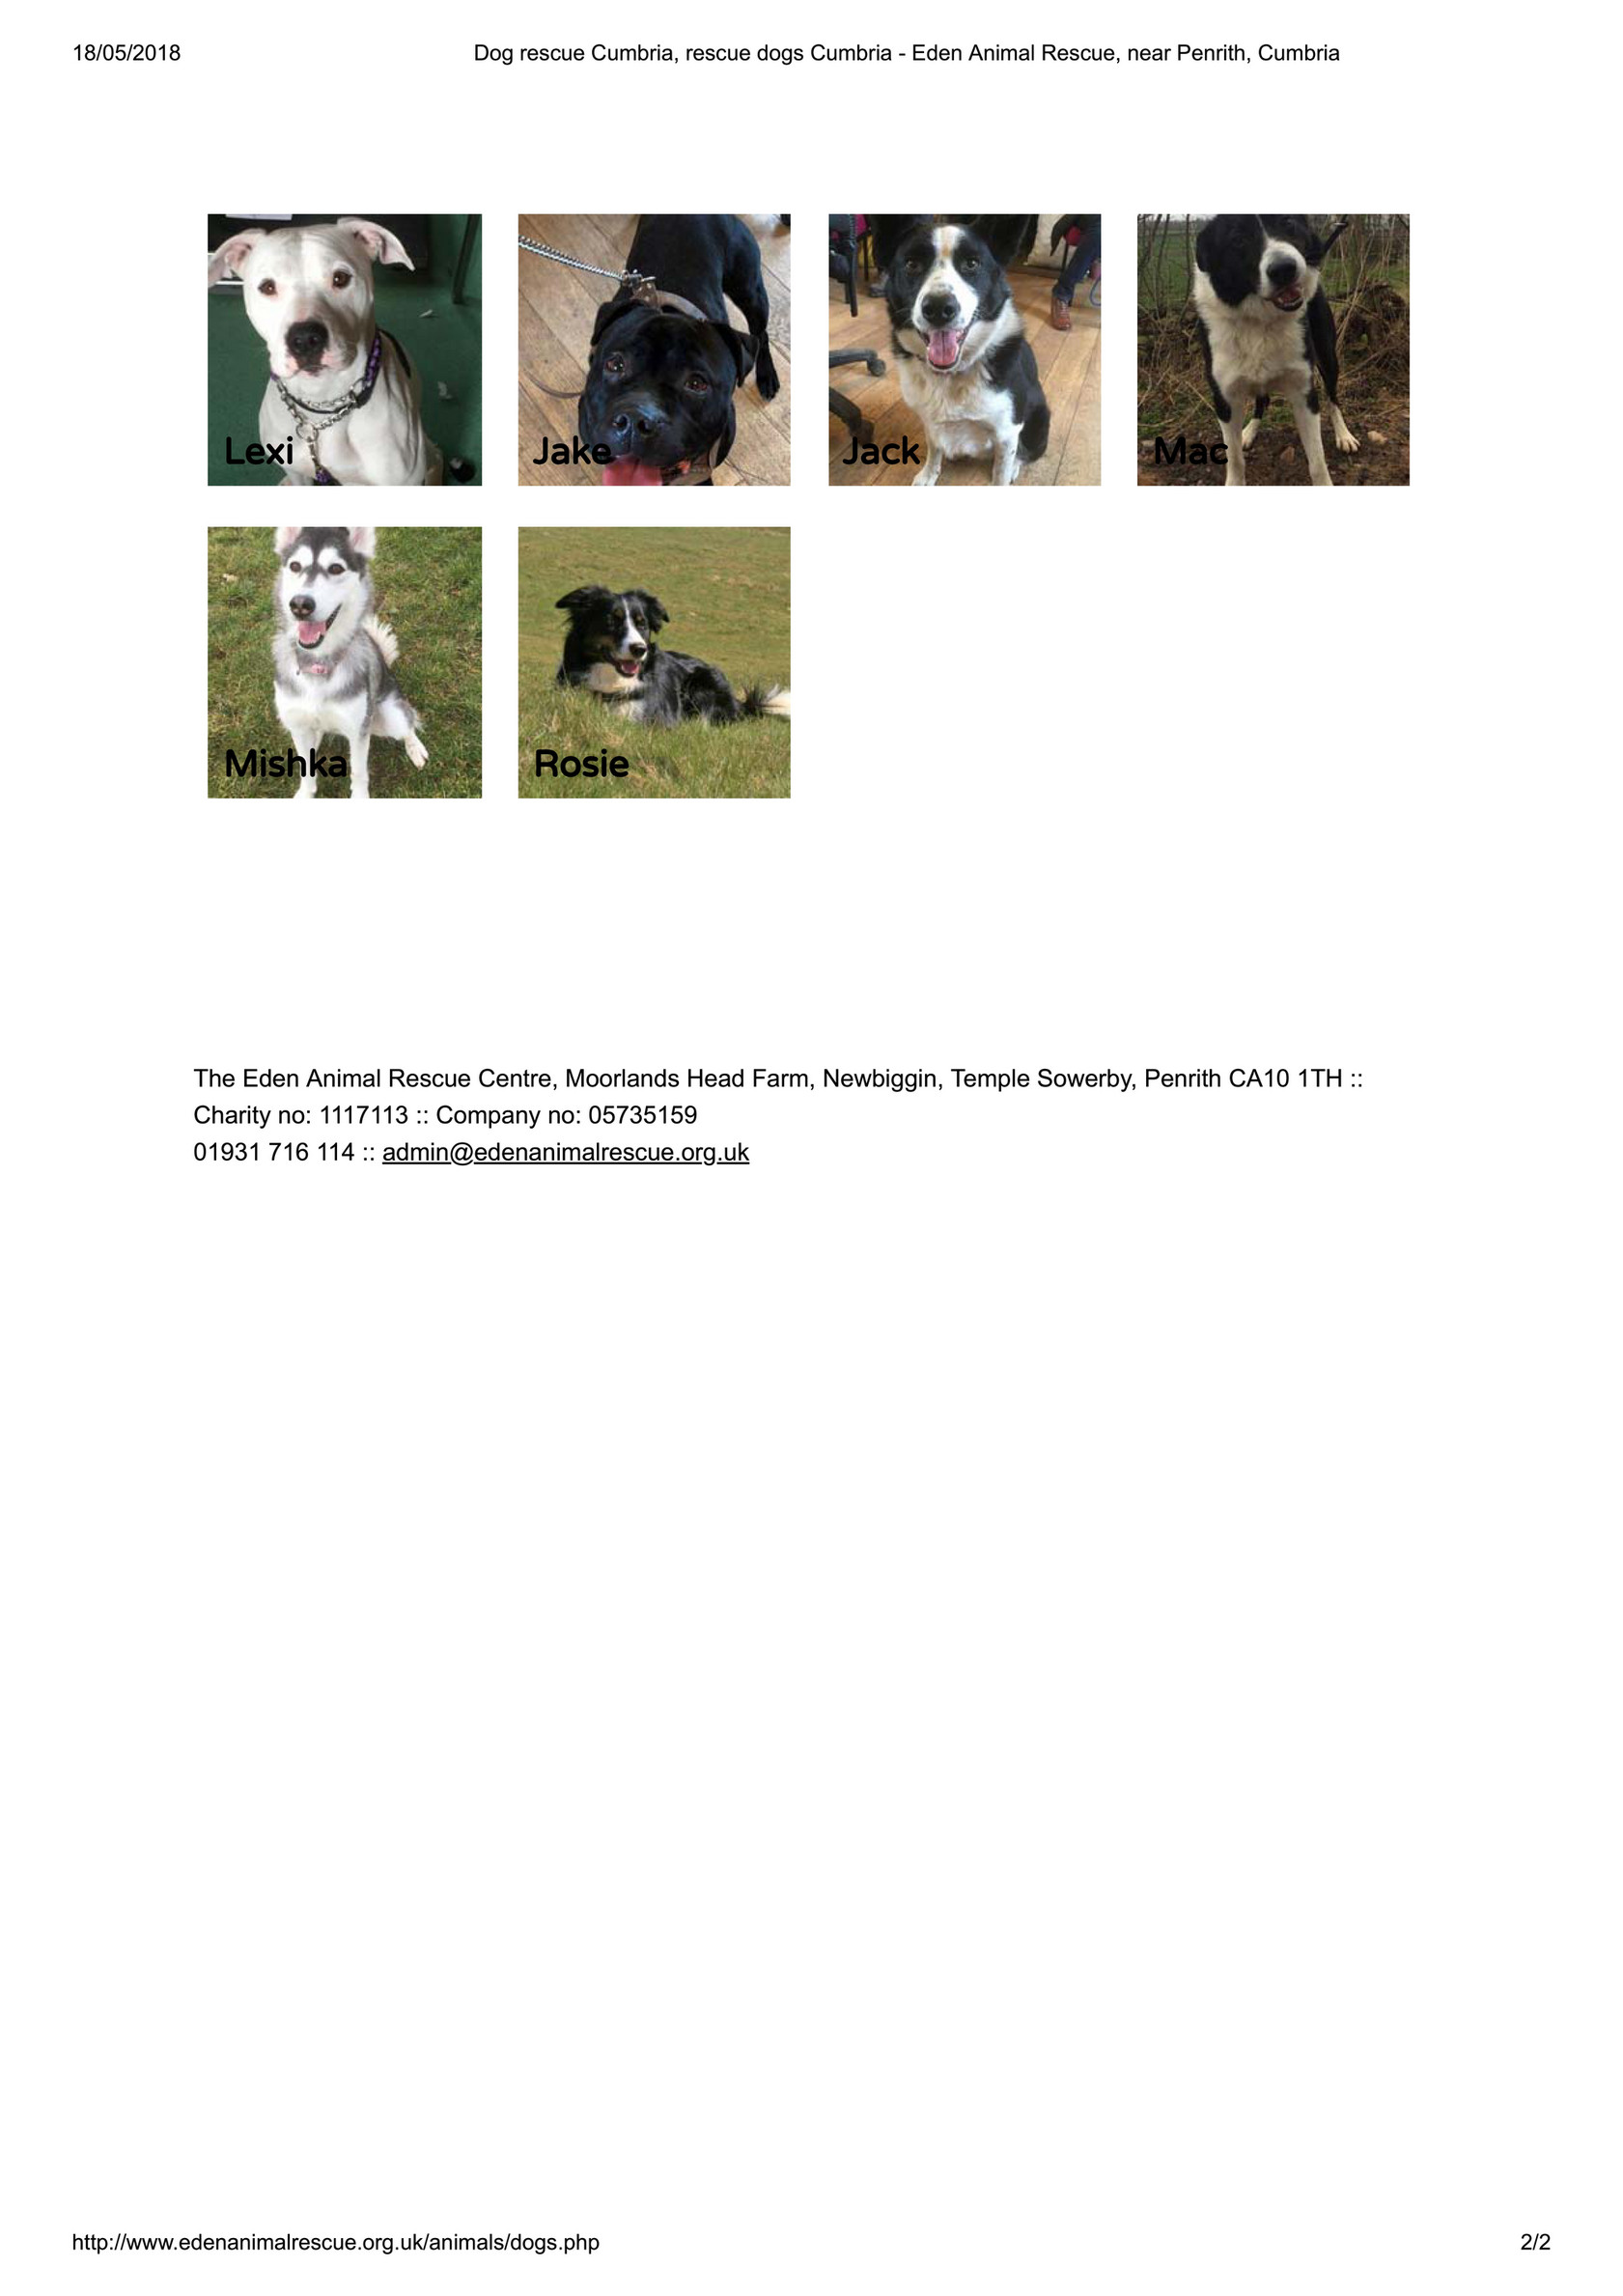 RACM - Dog rescue Cumbria, rescue dogs Cumbria.. - Page 1 - Created with  